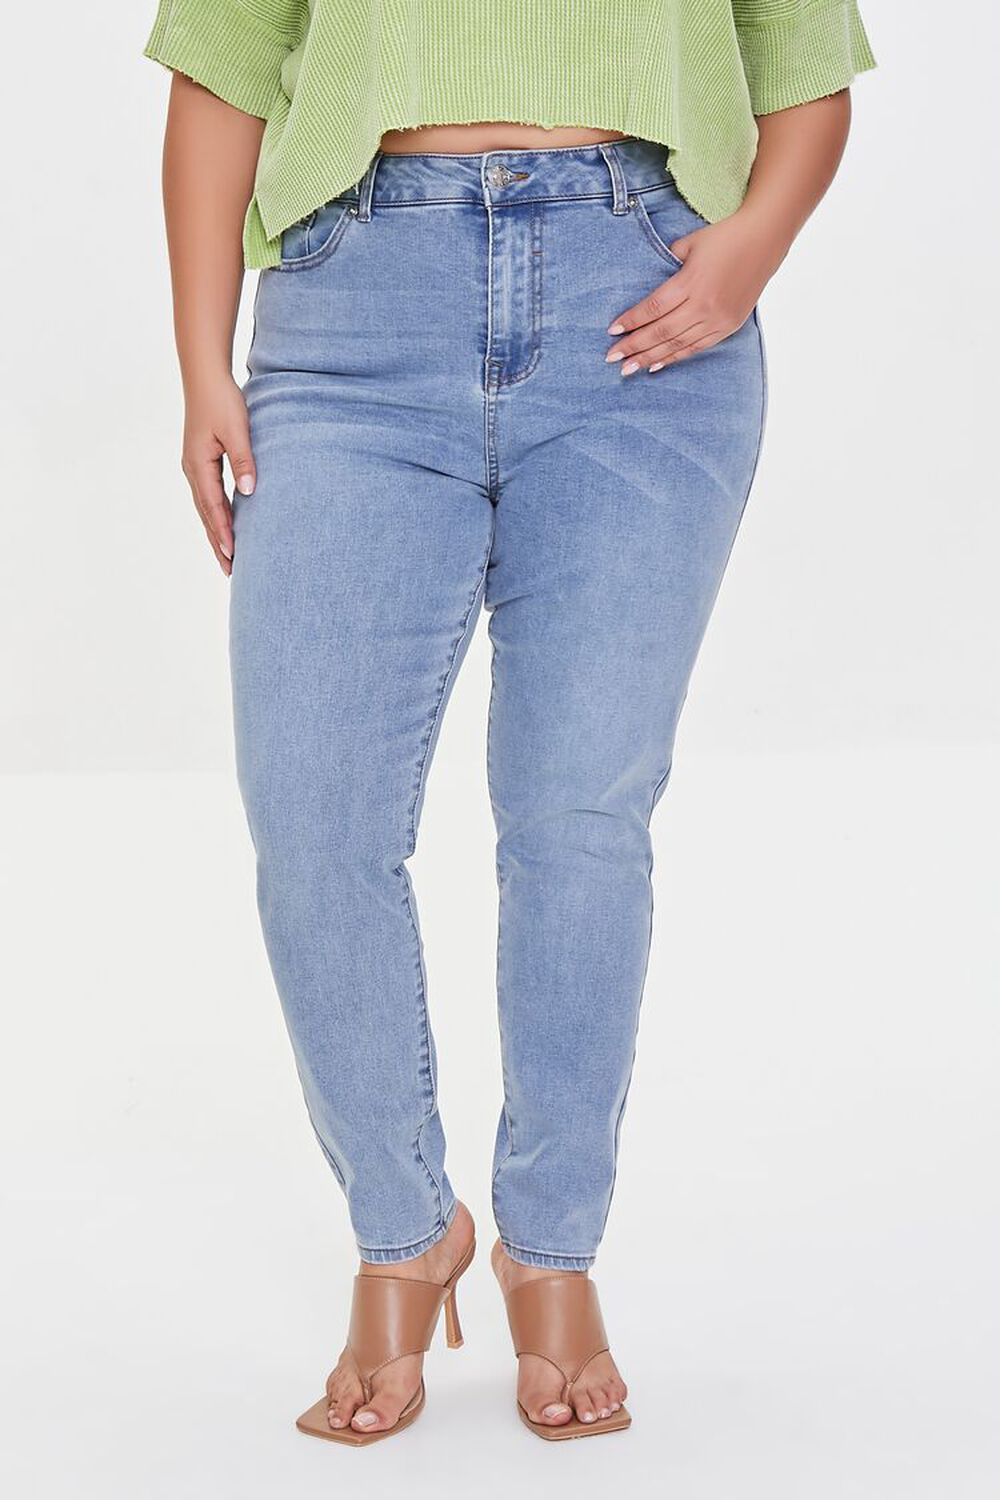 LIGHT DENIM Plus Size High-Rise Skinny Jeans, image 2